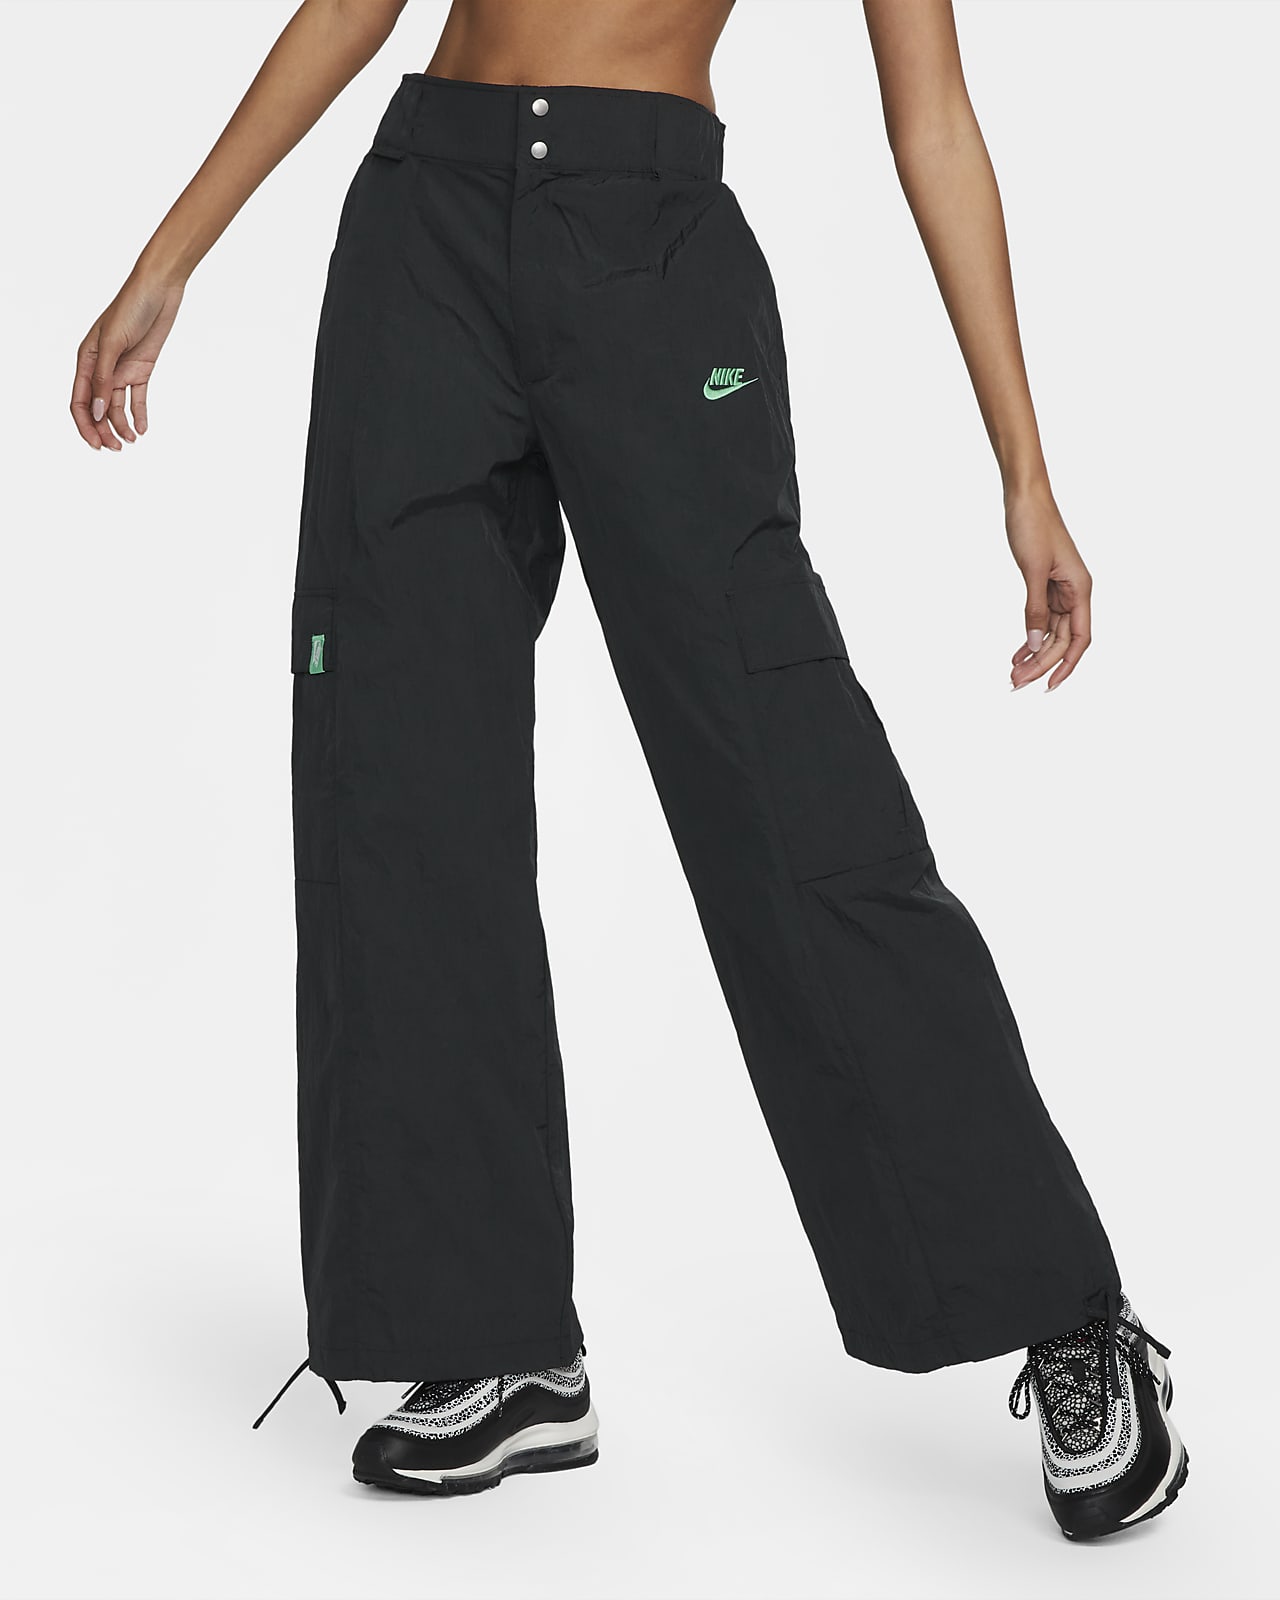 Berri Andes Obligar Pants cargo de tejido Woven de tiro alto oversized para mujer Nike  Sportswear. Nike.com